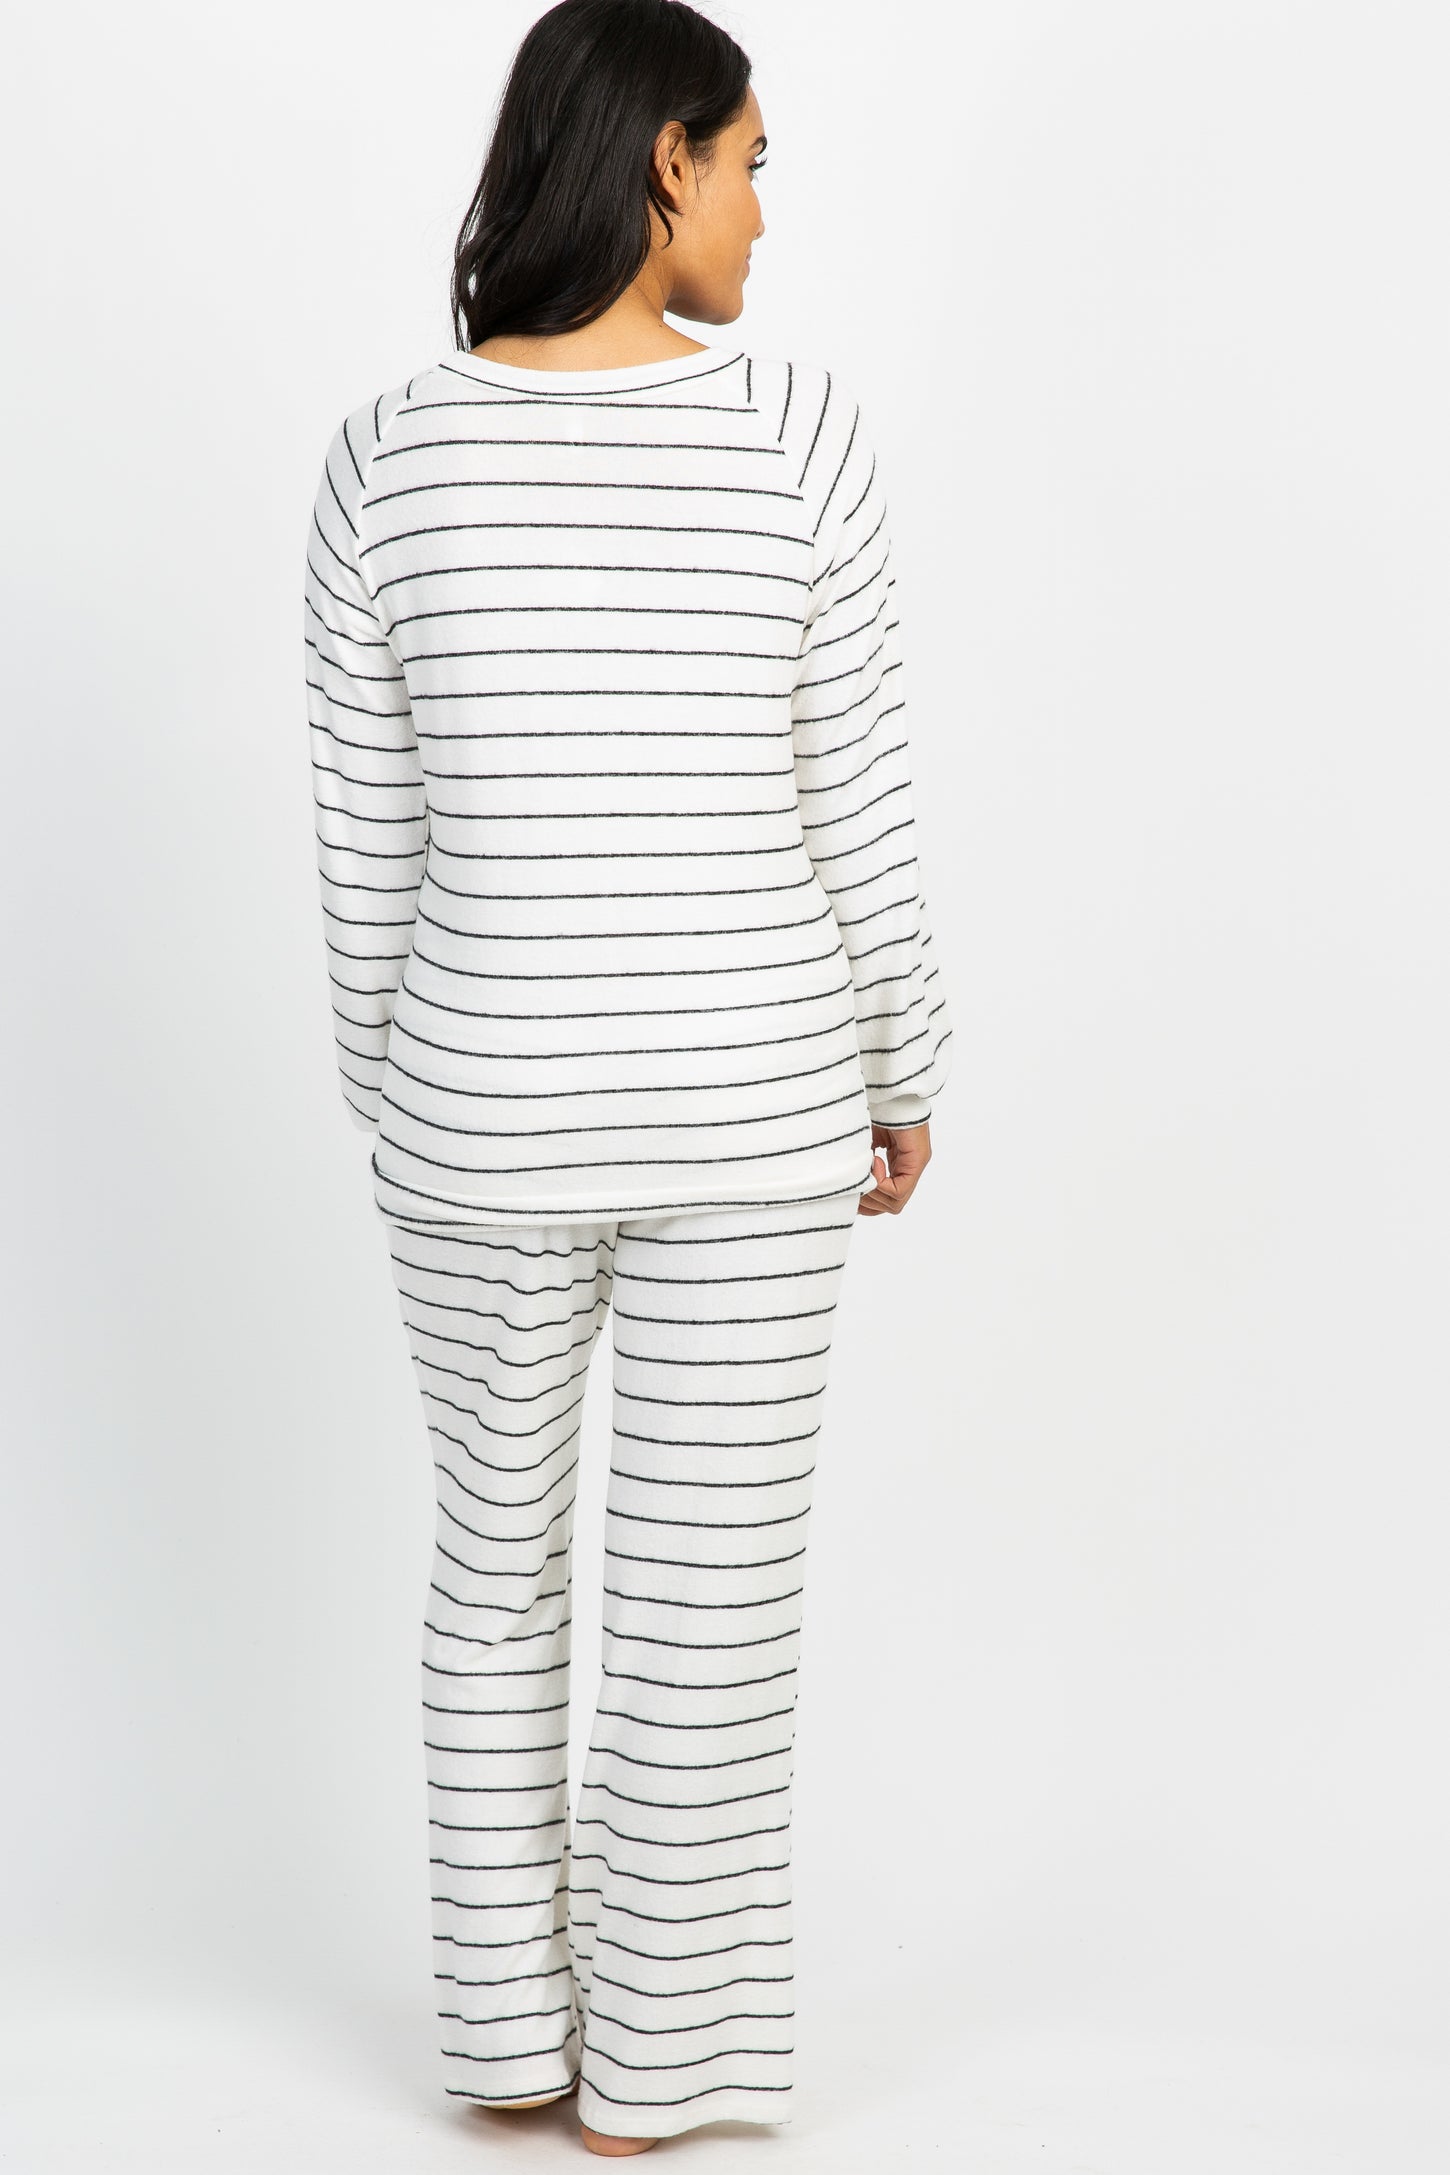 Ivory Striped Soft Long Sleeve Maternity Pajama Set